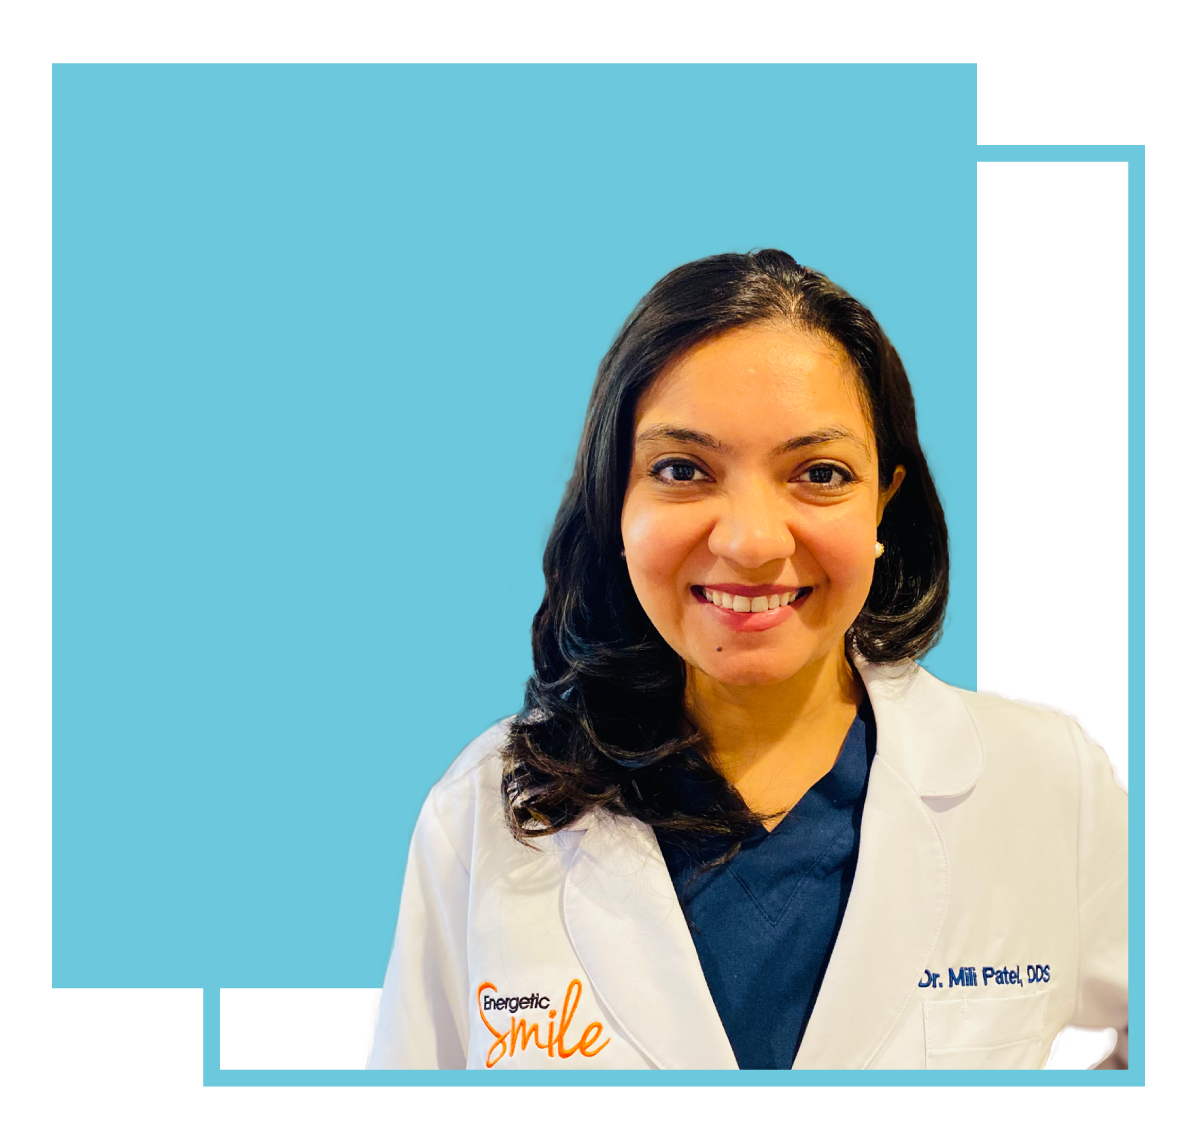 Dr. Mili Patel, DDS